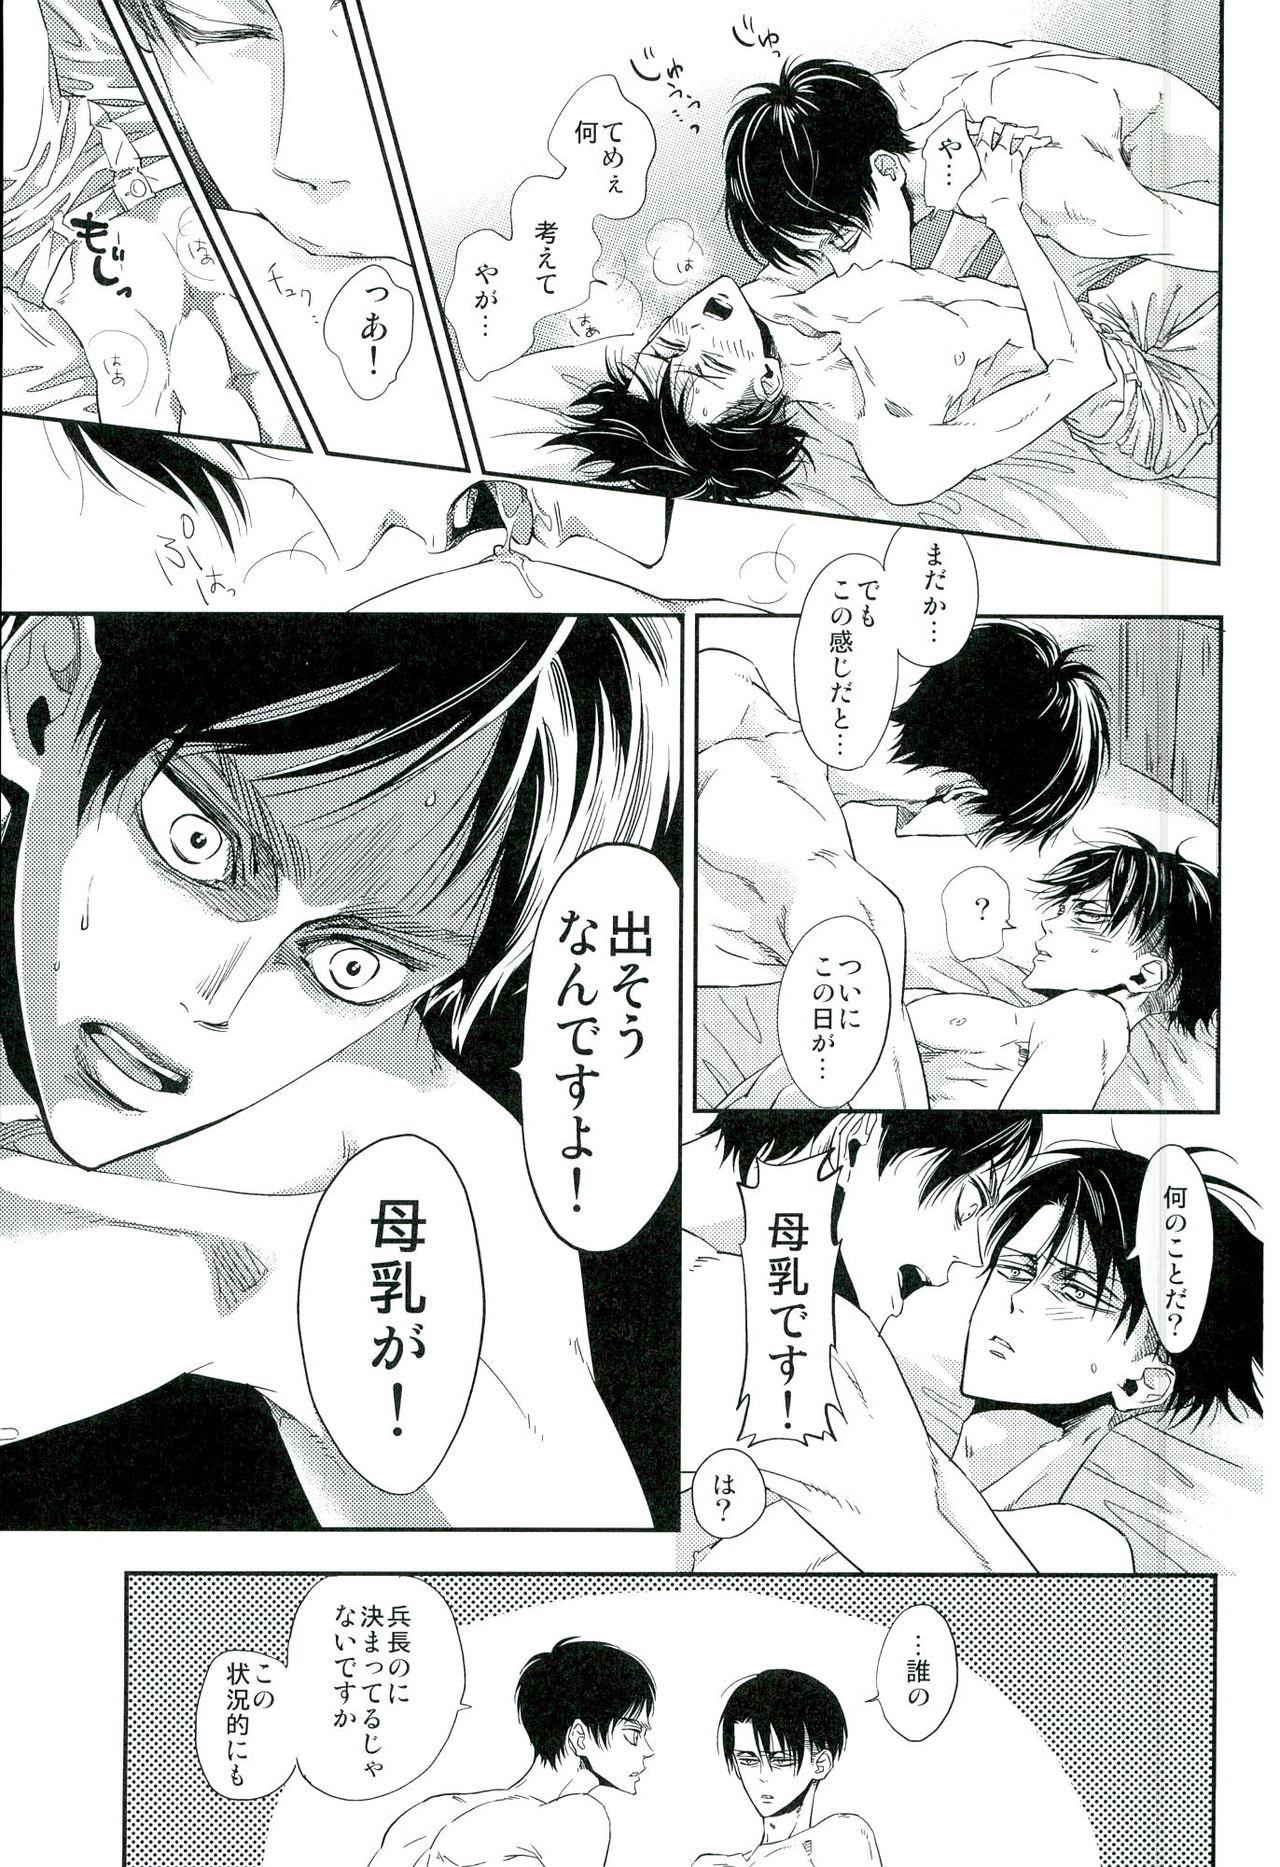 Gagging 兵長のおっぱいから母乳が出るところが見たい! - Shingeki no kyojin Bwc - Page 4